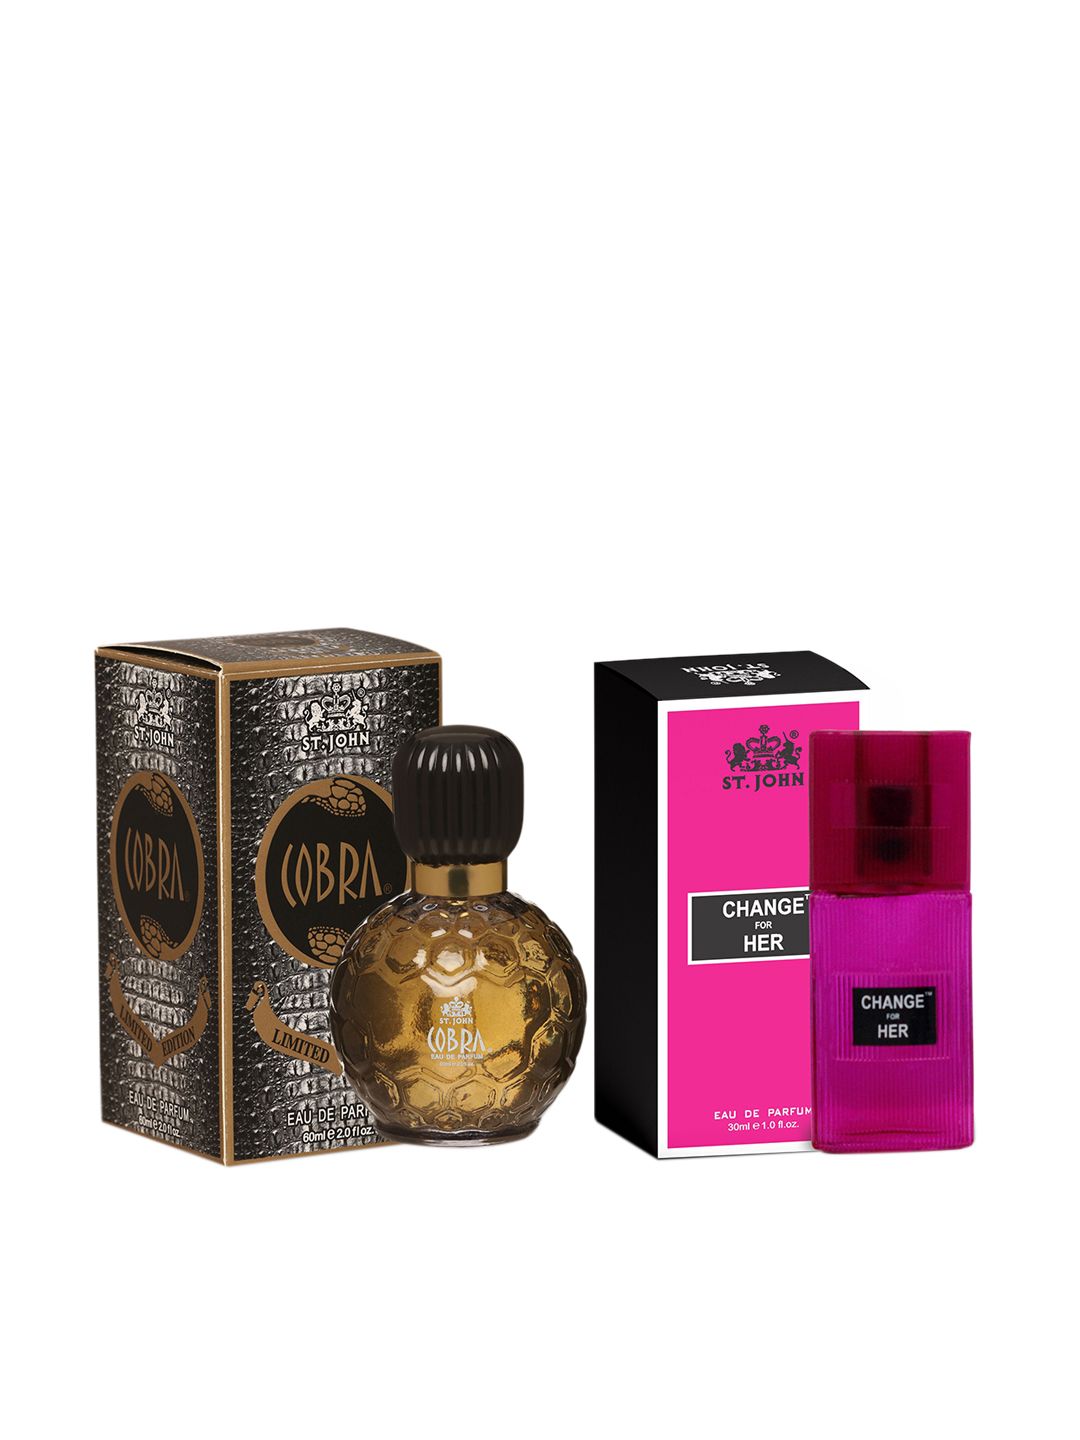 St. John Couple's Perfume Gift Set COBRA 60ml & CHANGE 90 ML Price in India